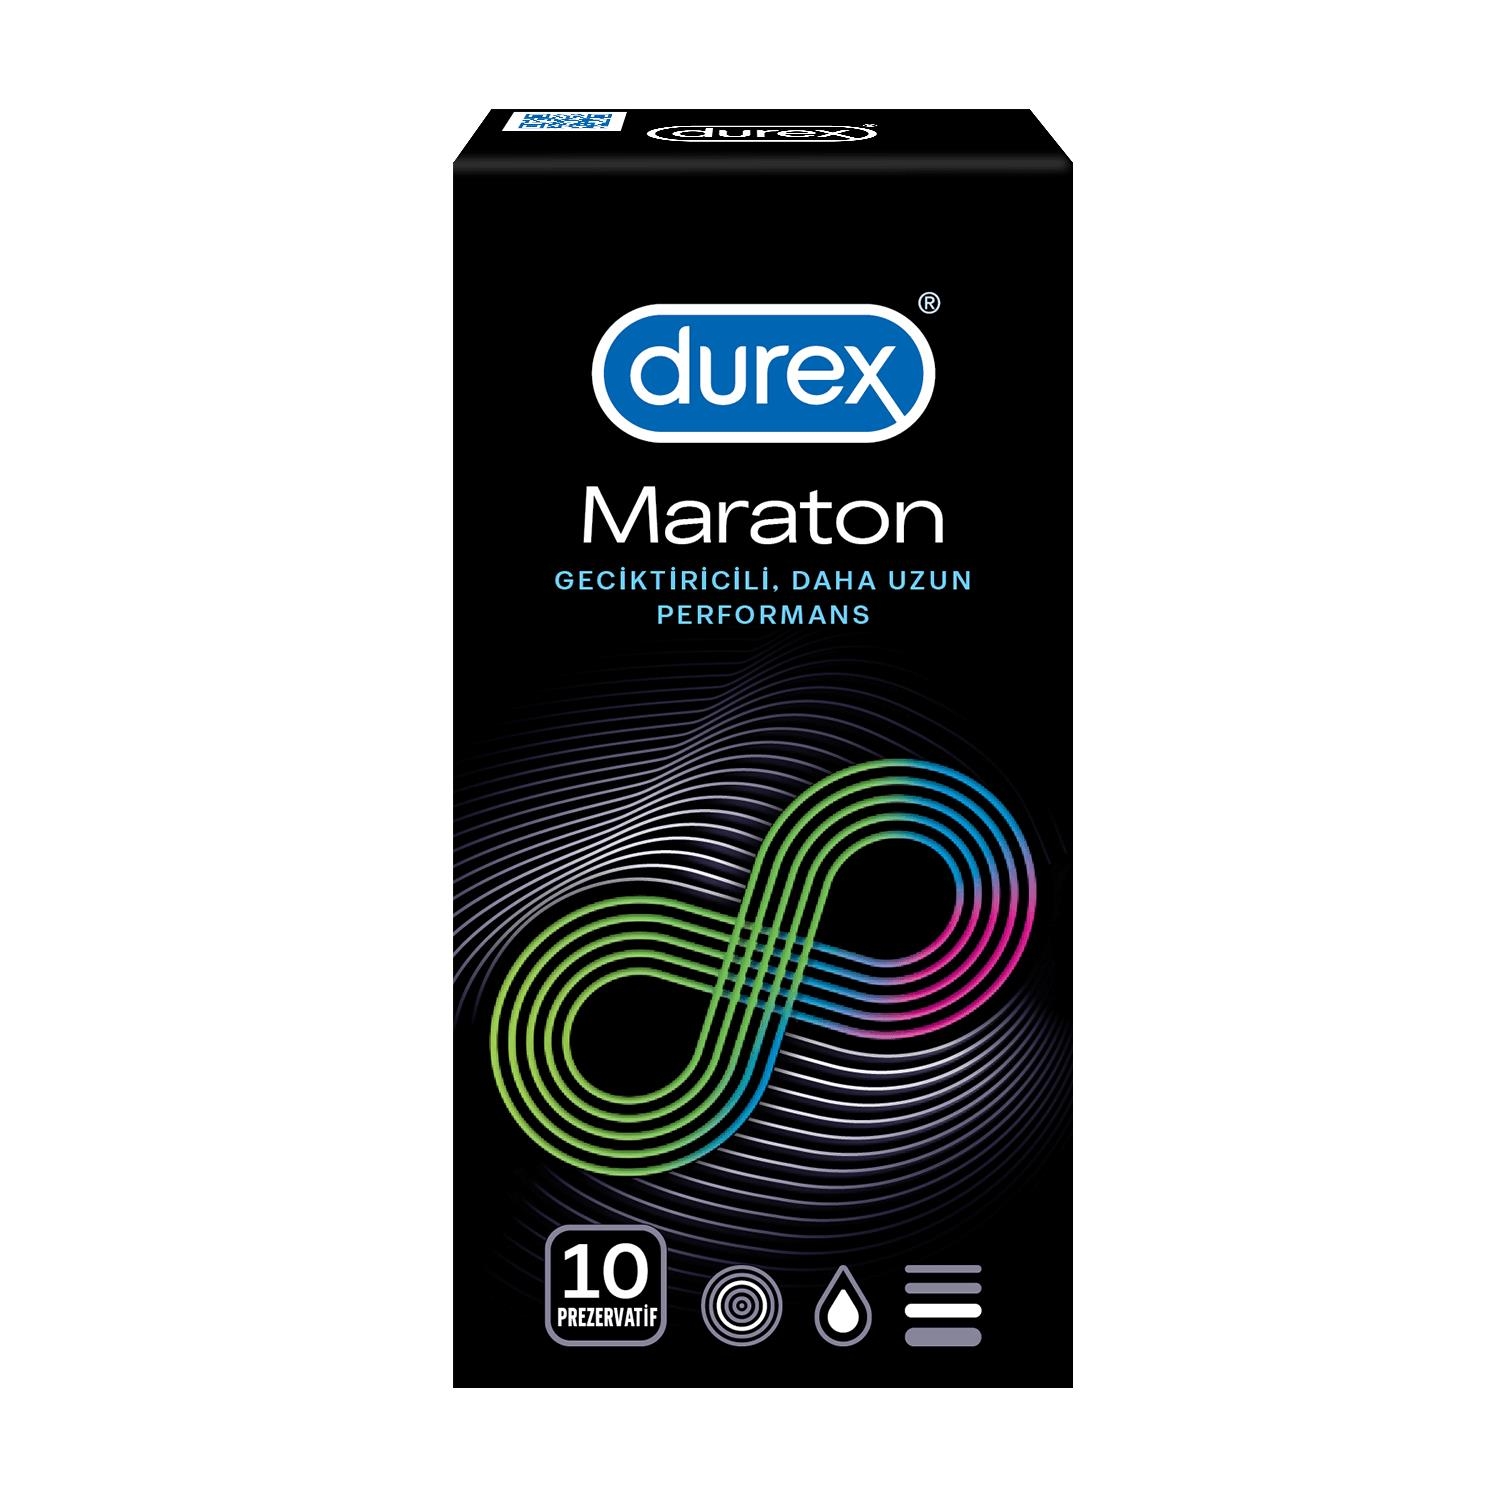 Durex Maraton 10lu Prezervatif - 1